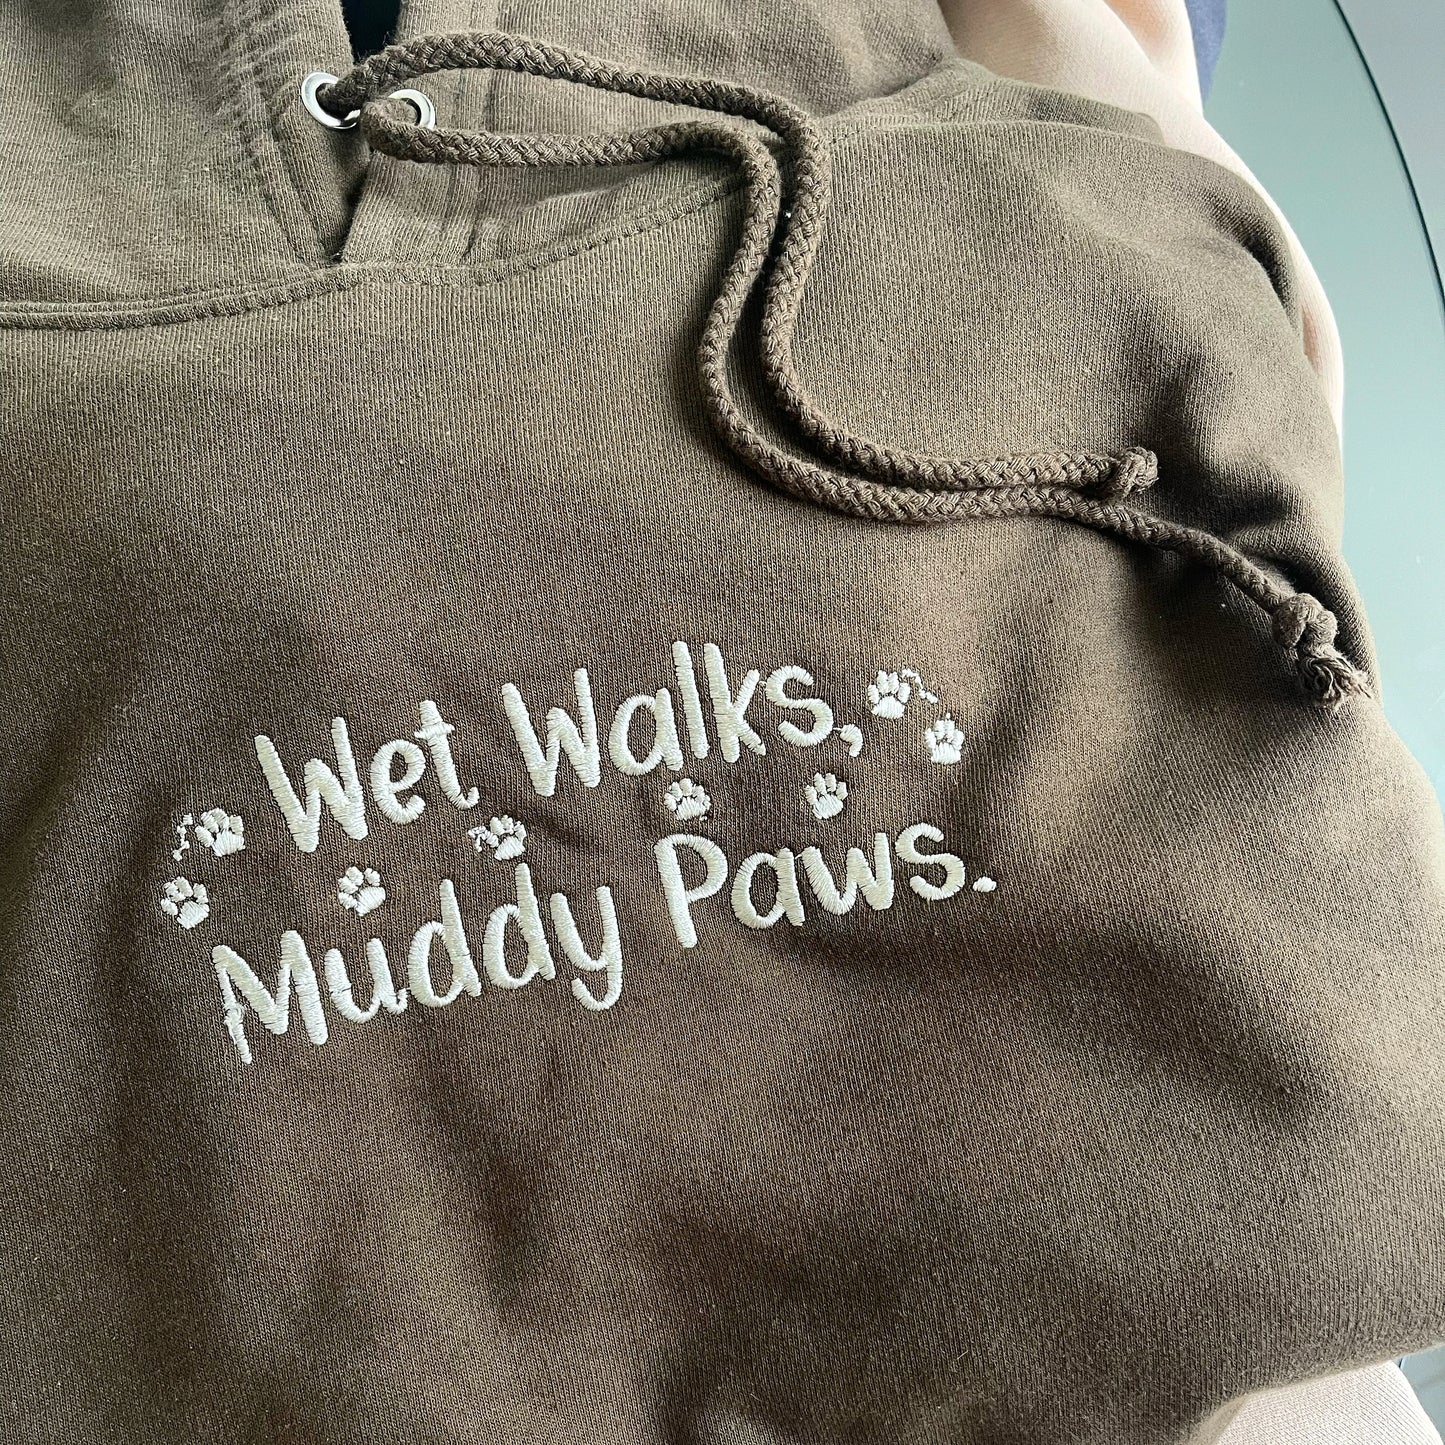 Embroidered Wet Walks Muddy Paws Hoodie - Khaki, Large